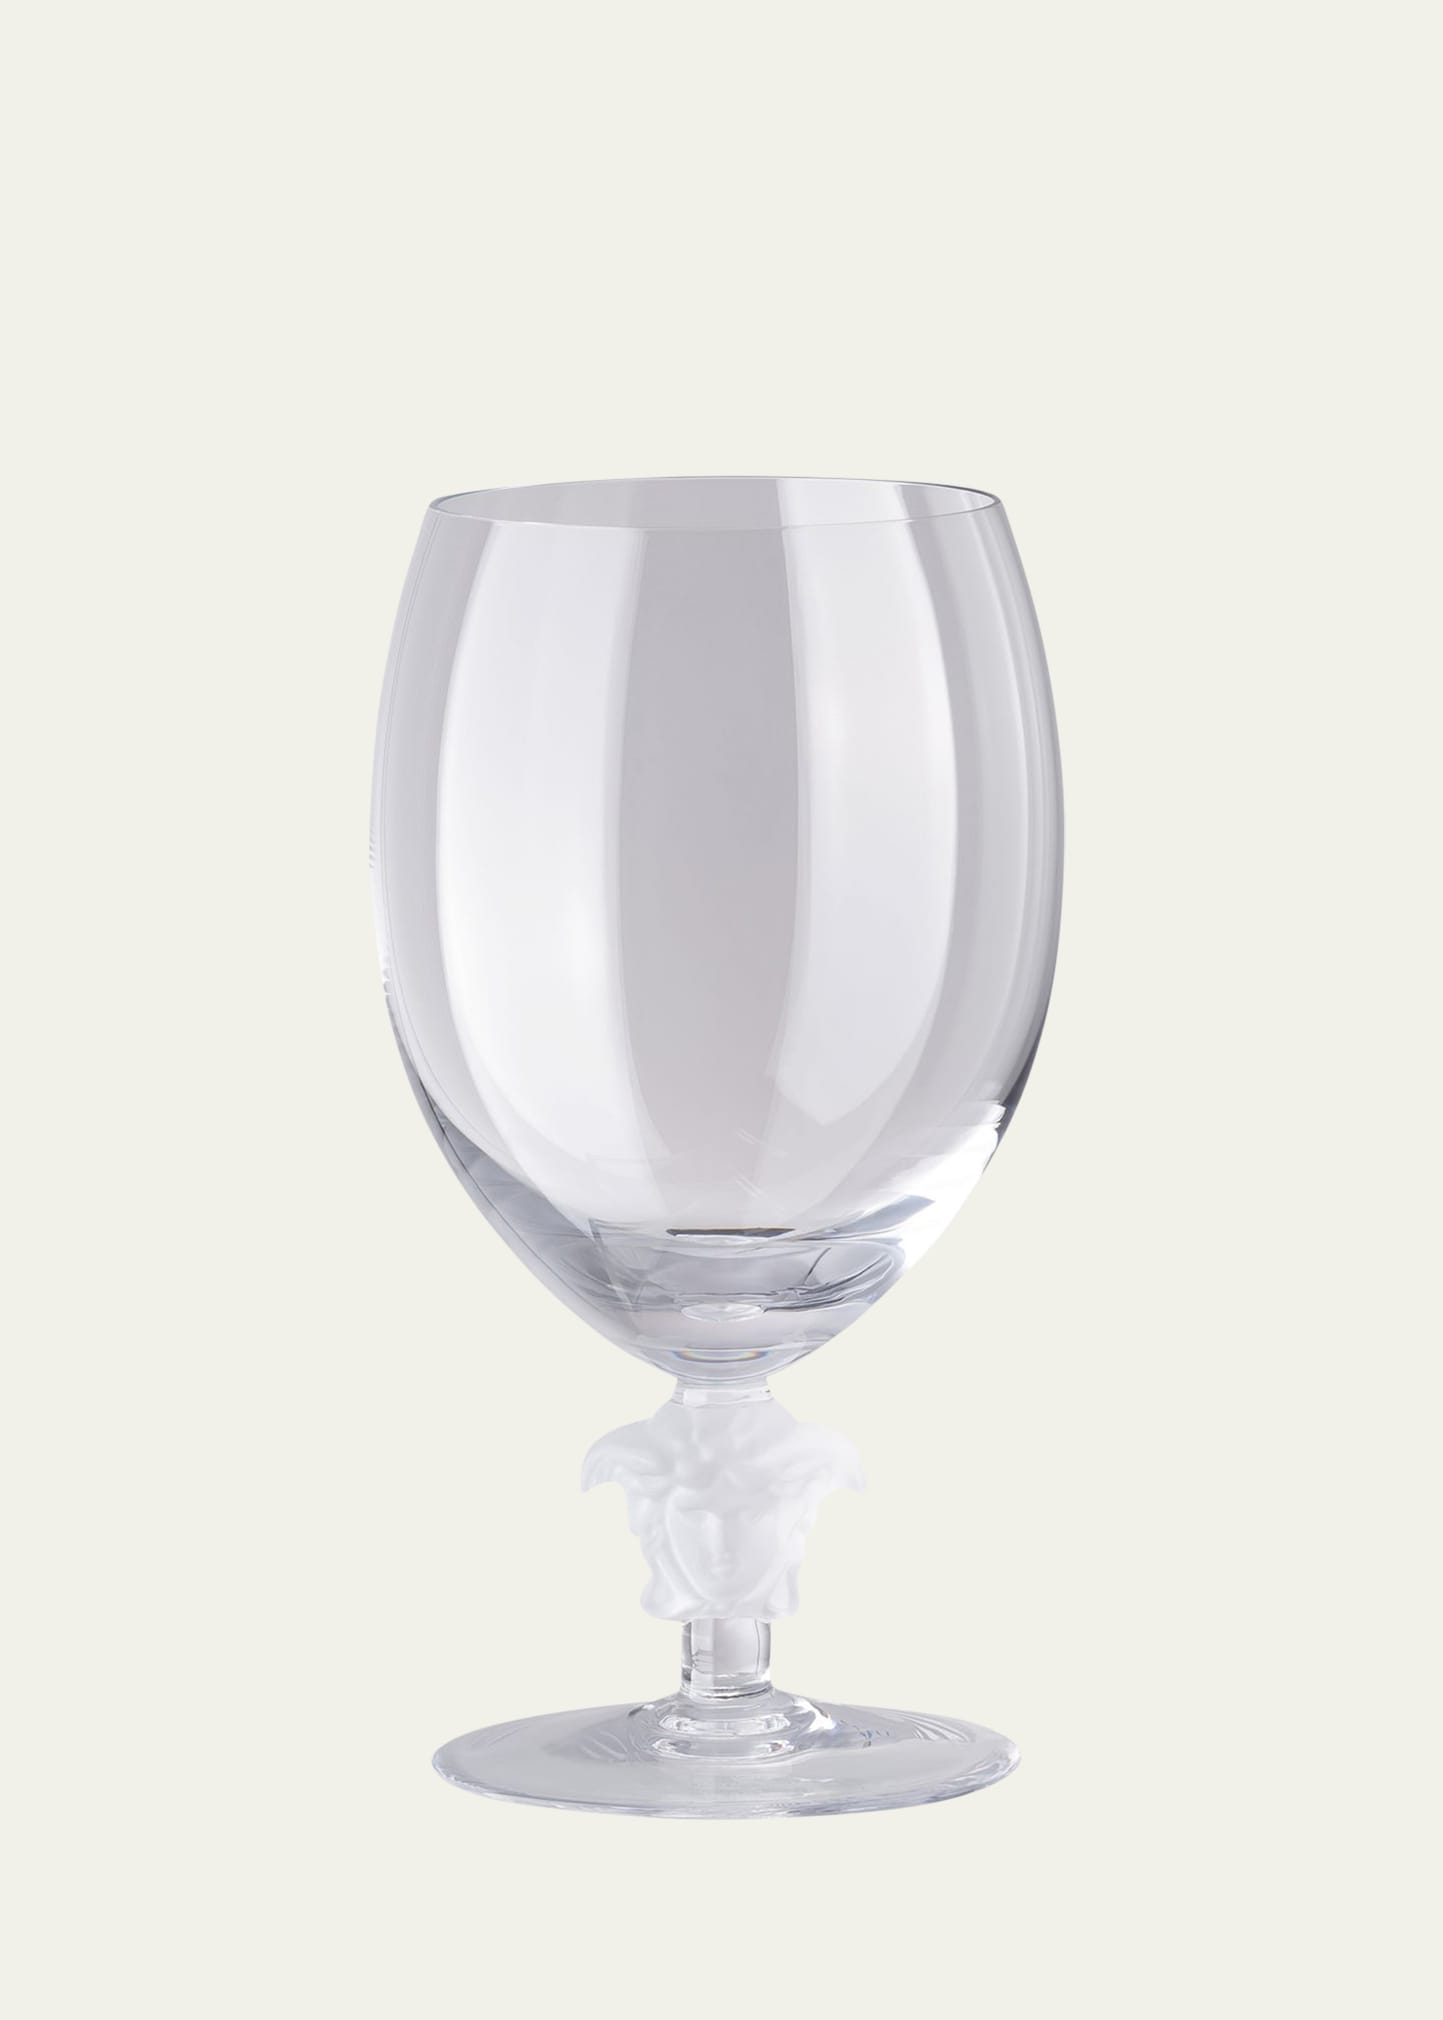 Medusa Lumiere Short Stem Clear Red Wine Glasses, Set of 2